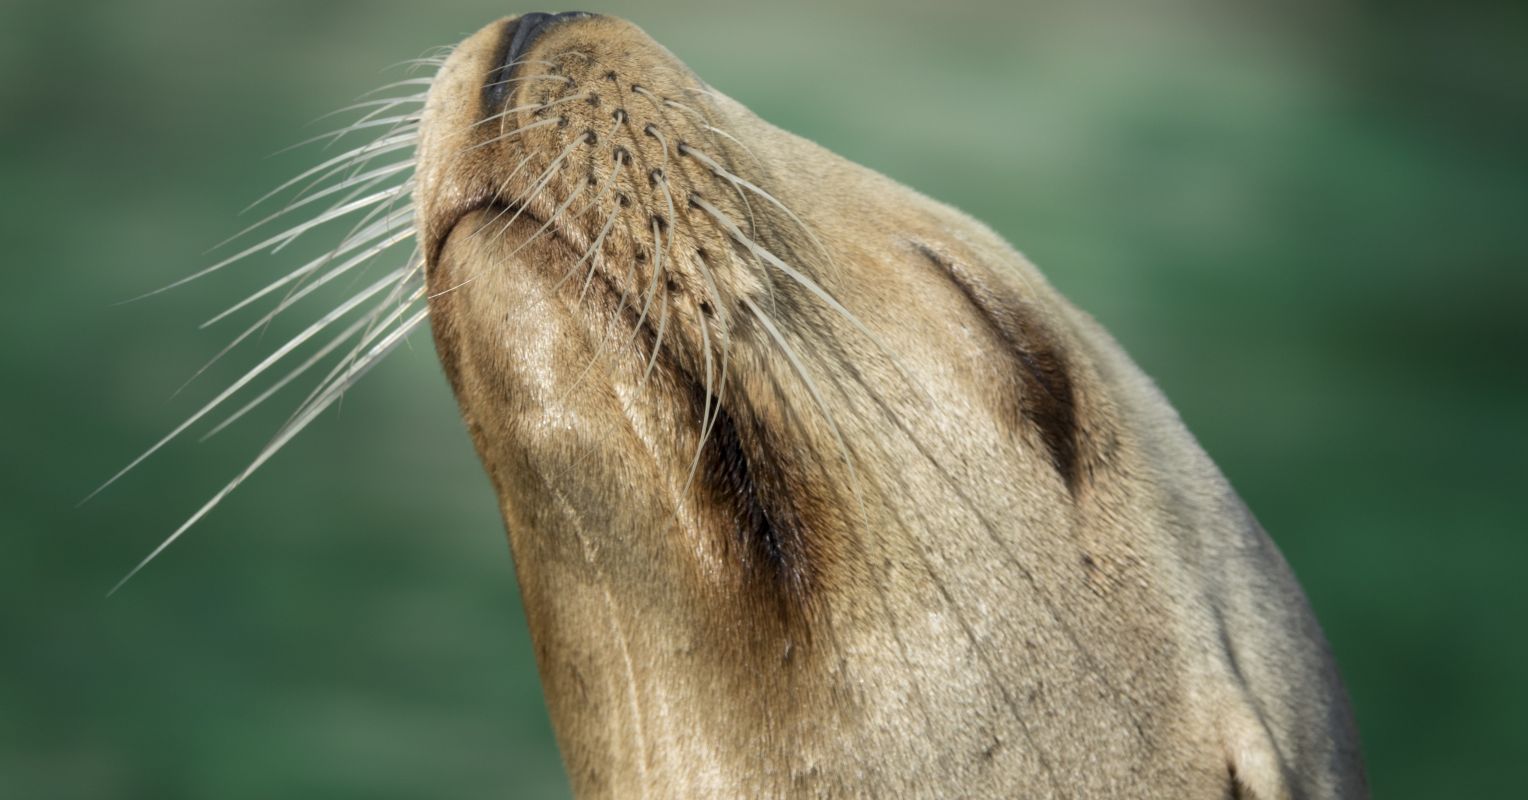 File:Walrus animal male detailed photo.jpg - Wikimedia Commons